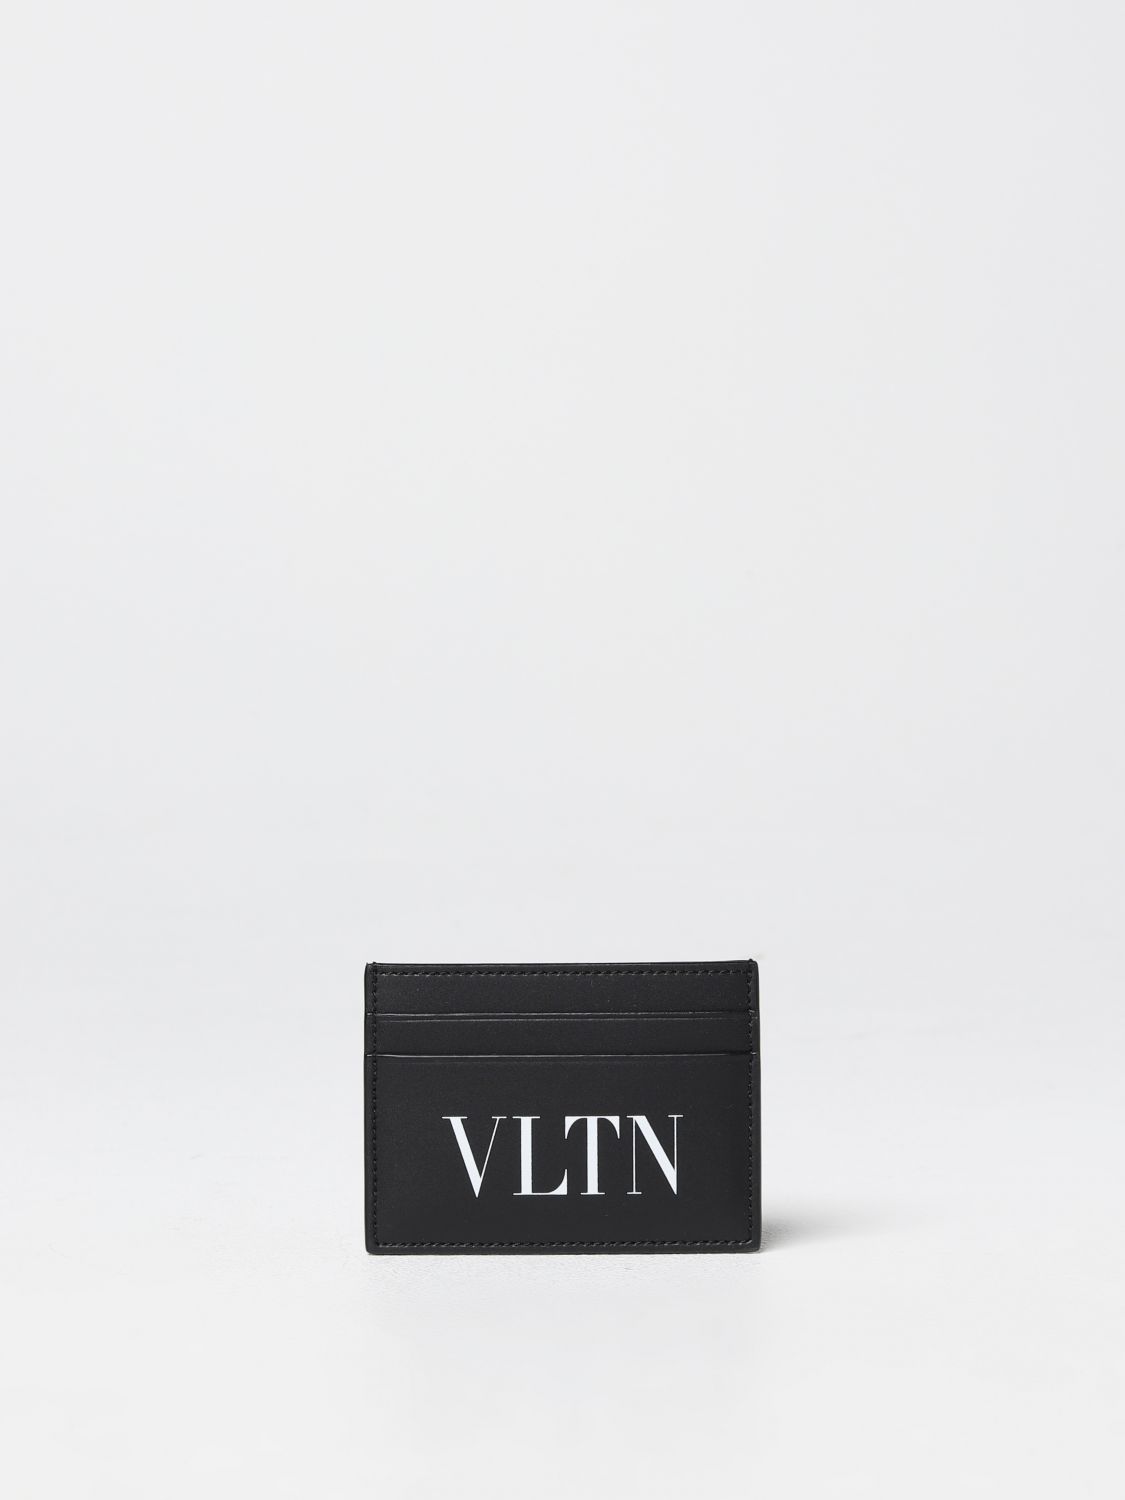 VALENTINO VLTN credit card holder in leather - Black | Valentino Garavani wallet 1Y2P0T83LVN online on GIGLIO.COM